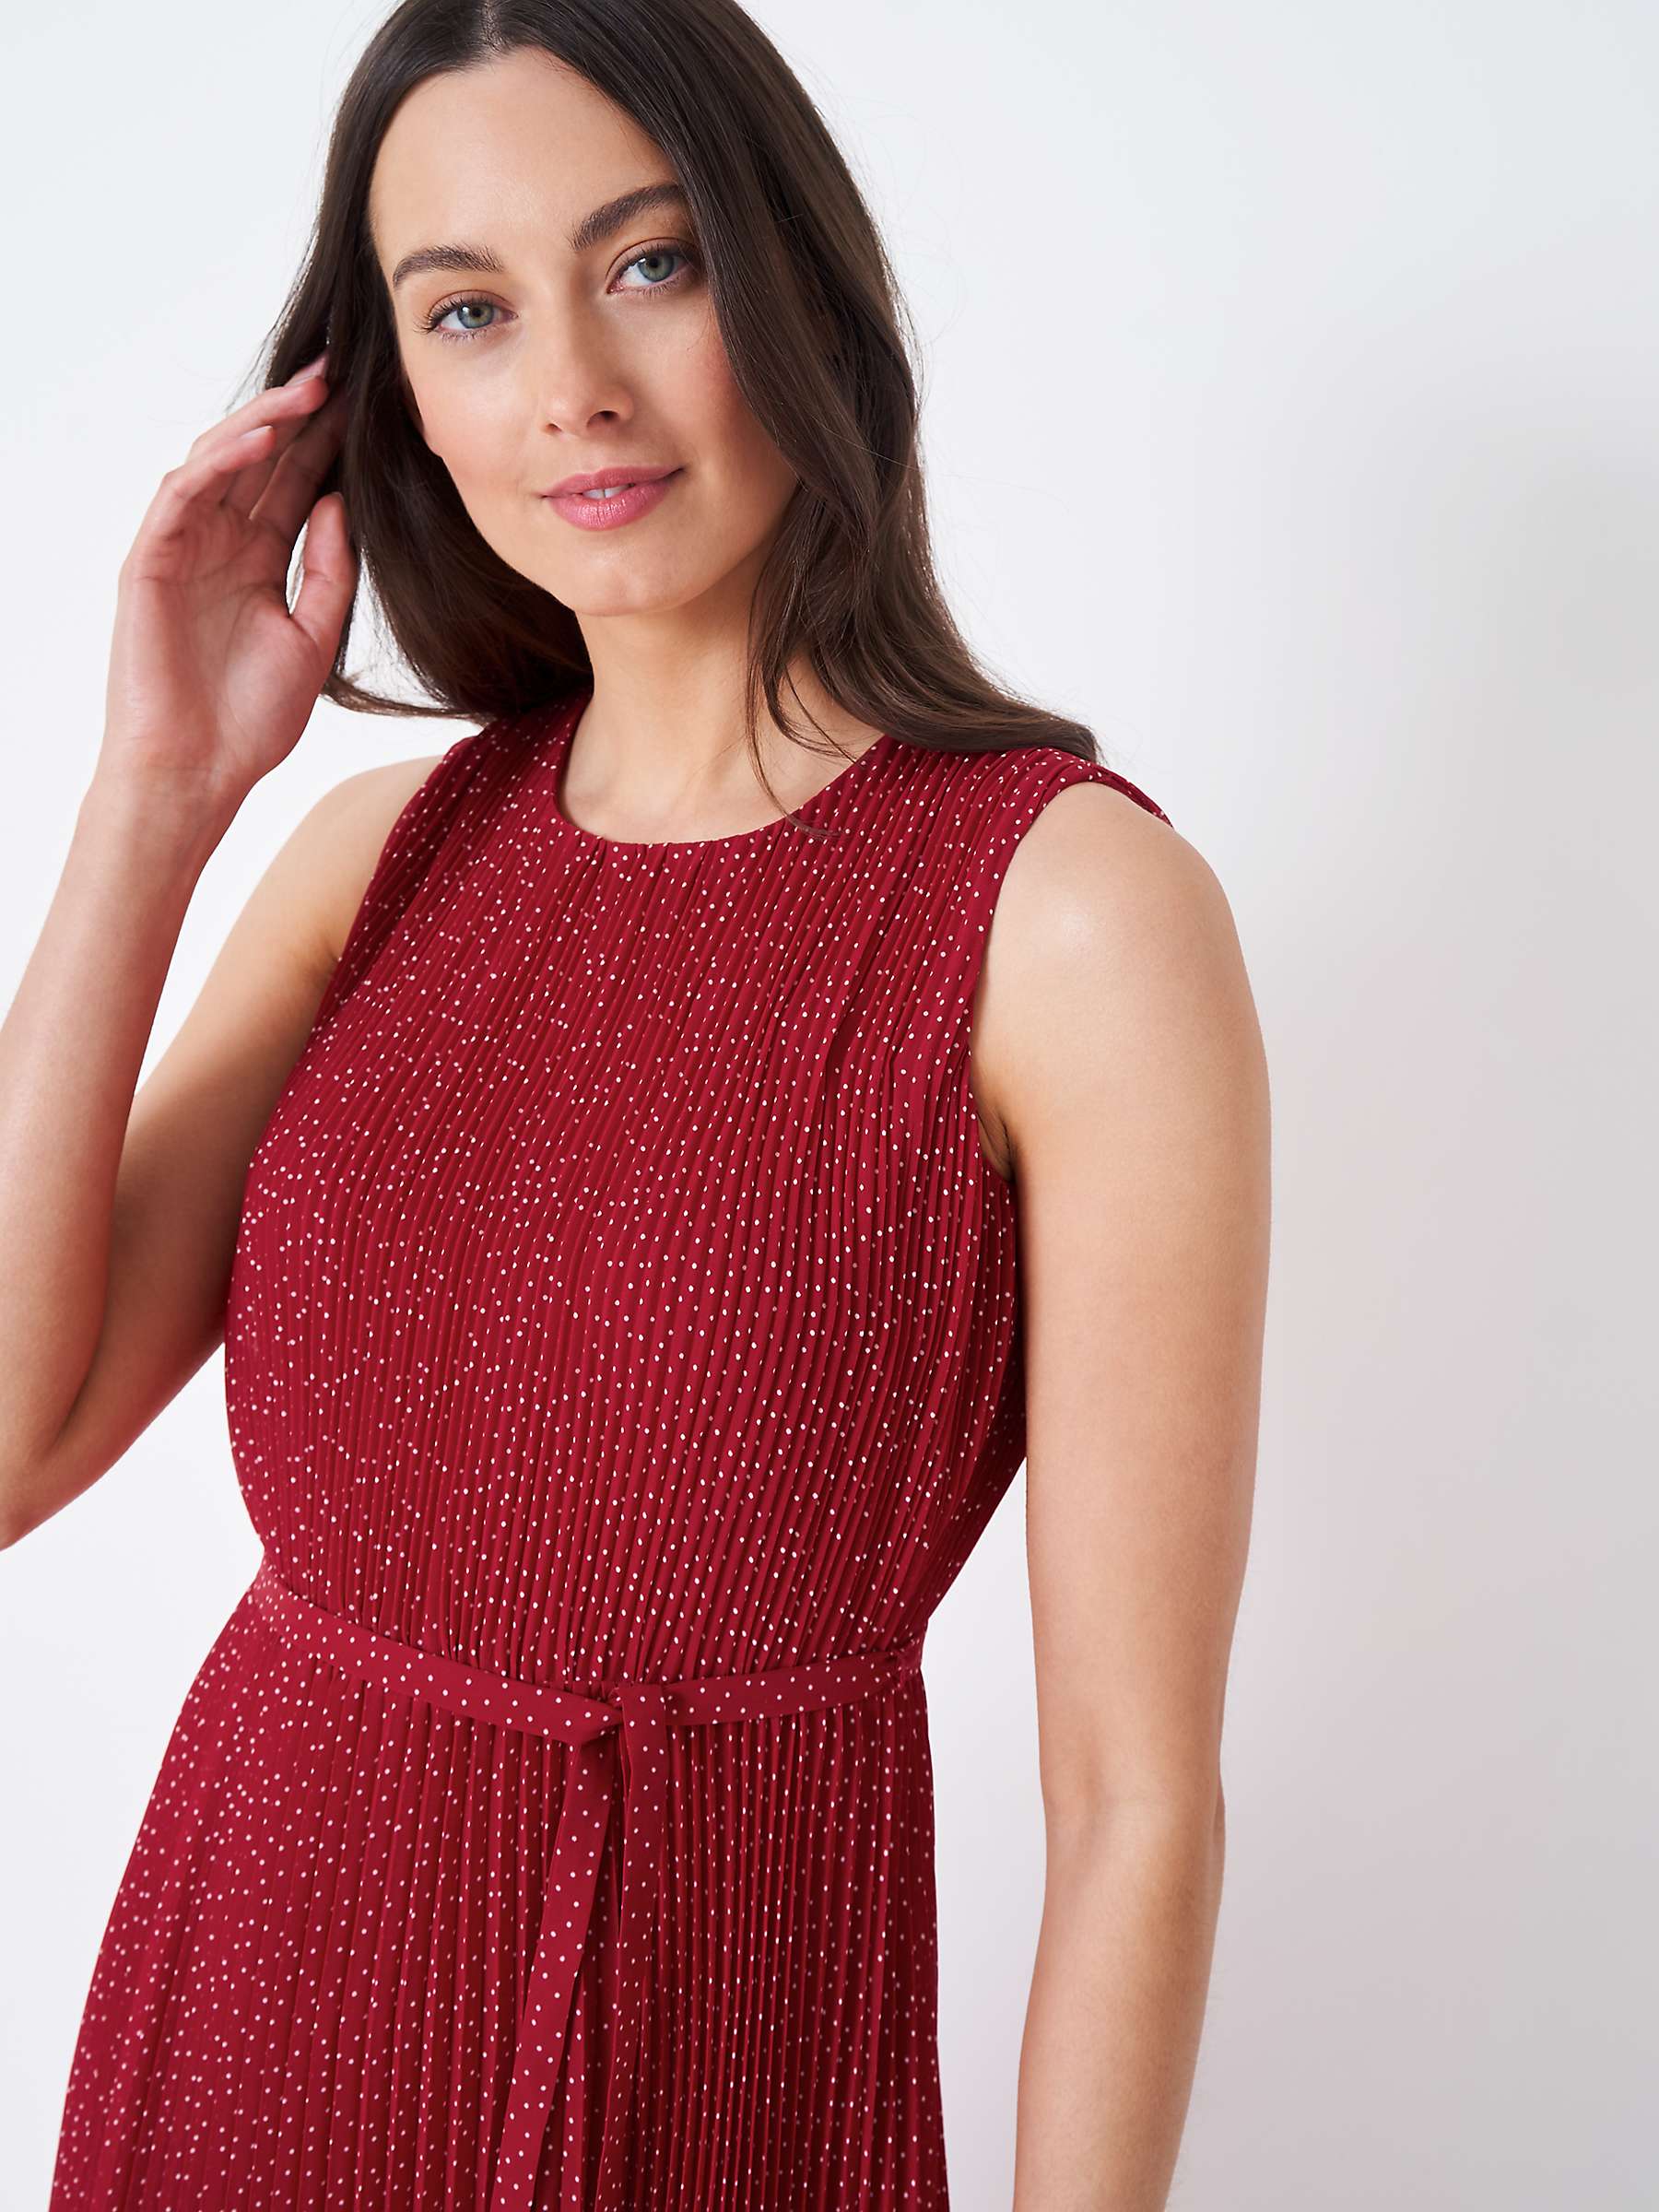 Buy Crew Clothing Plisse Spot Midi Dress, Red/White Online at johnlewis.com